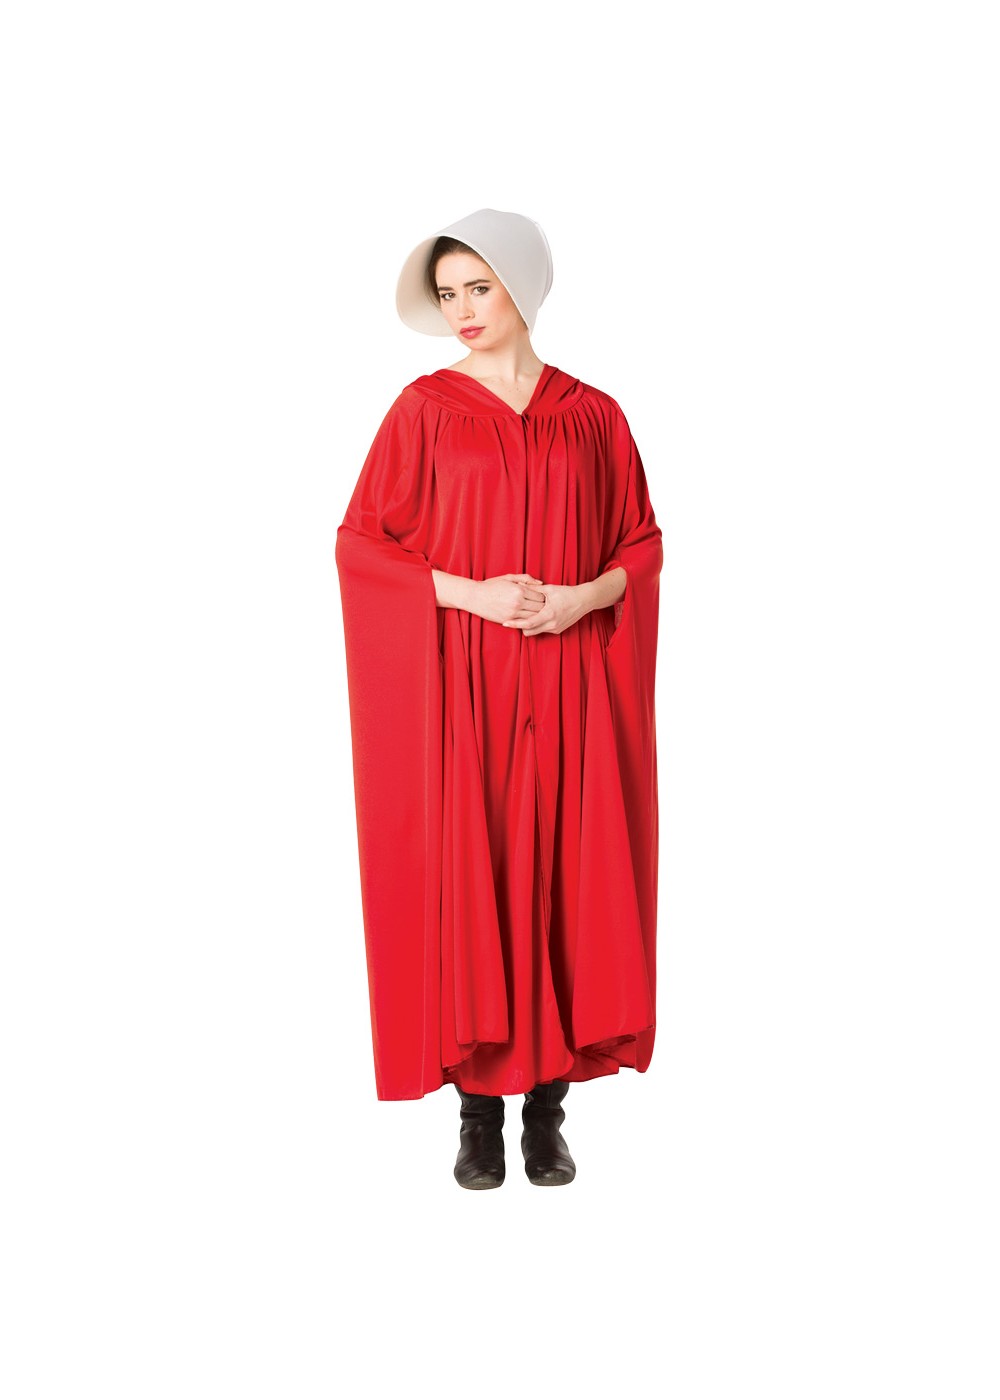 Red Handmaidens Fertility Cloak